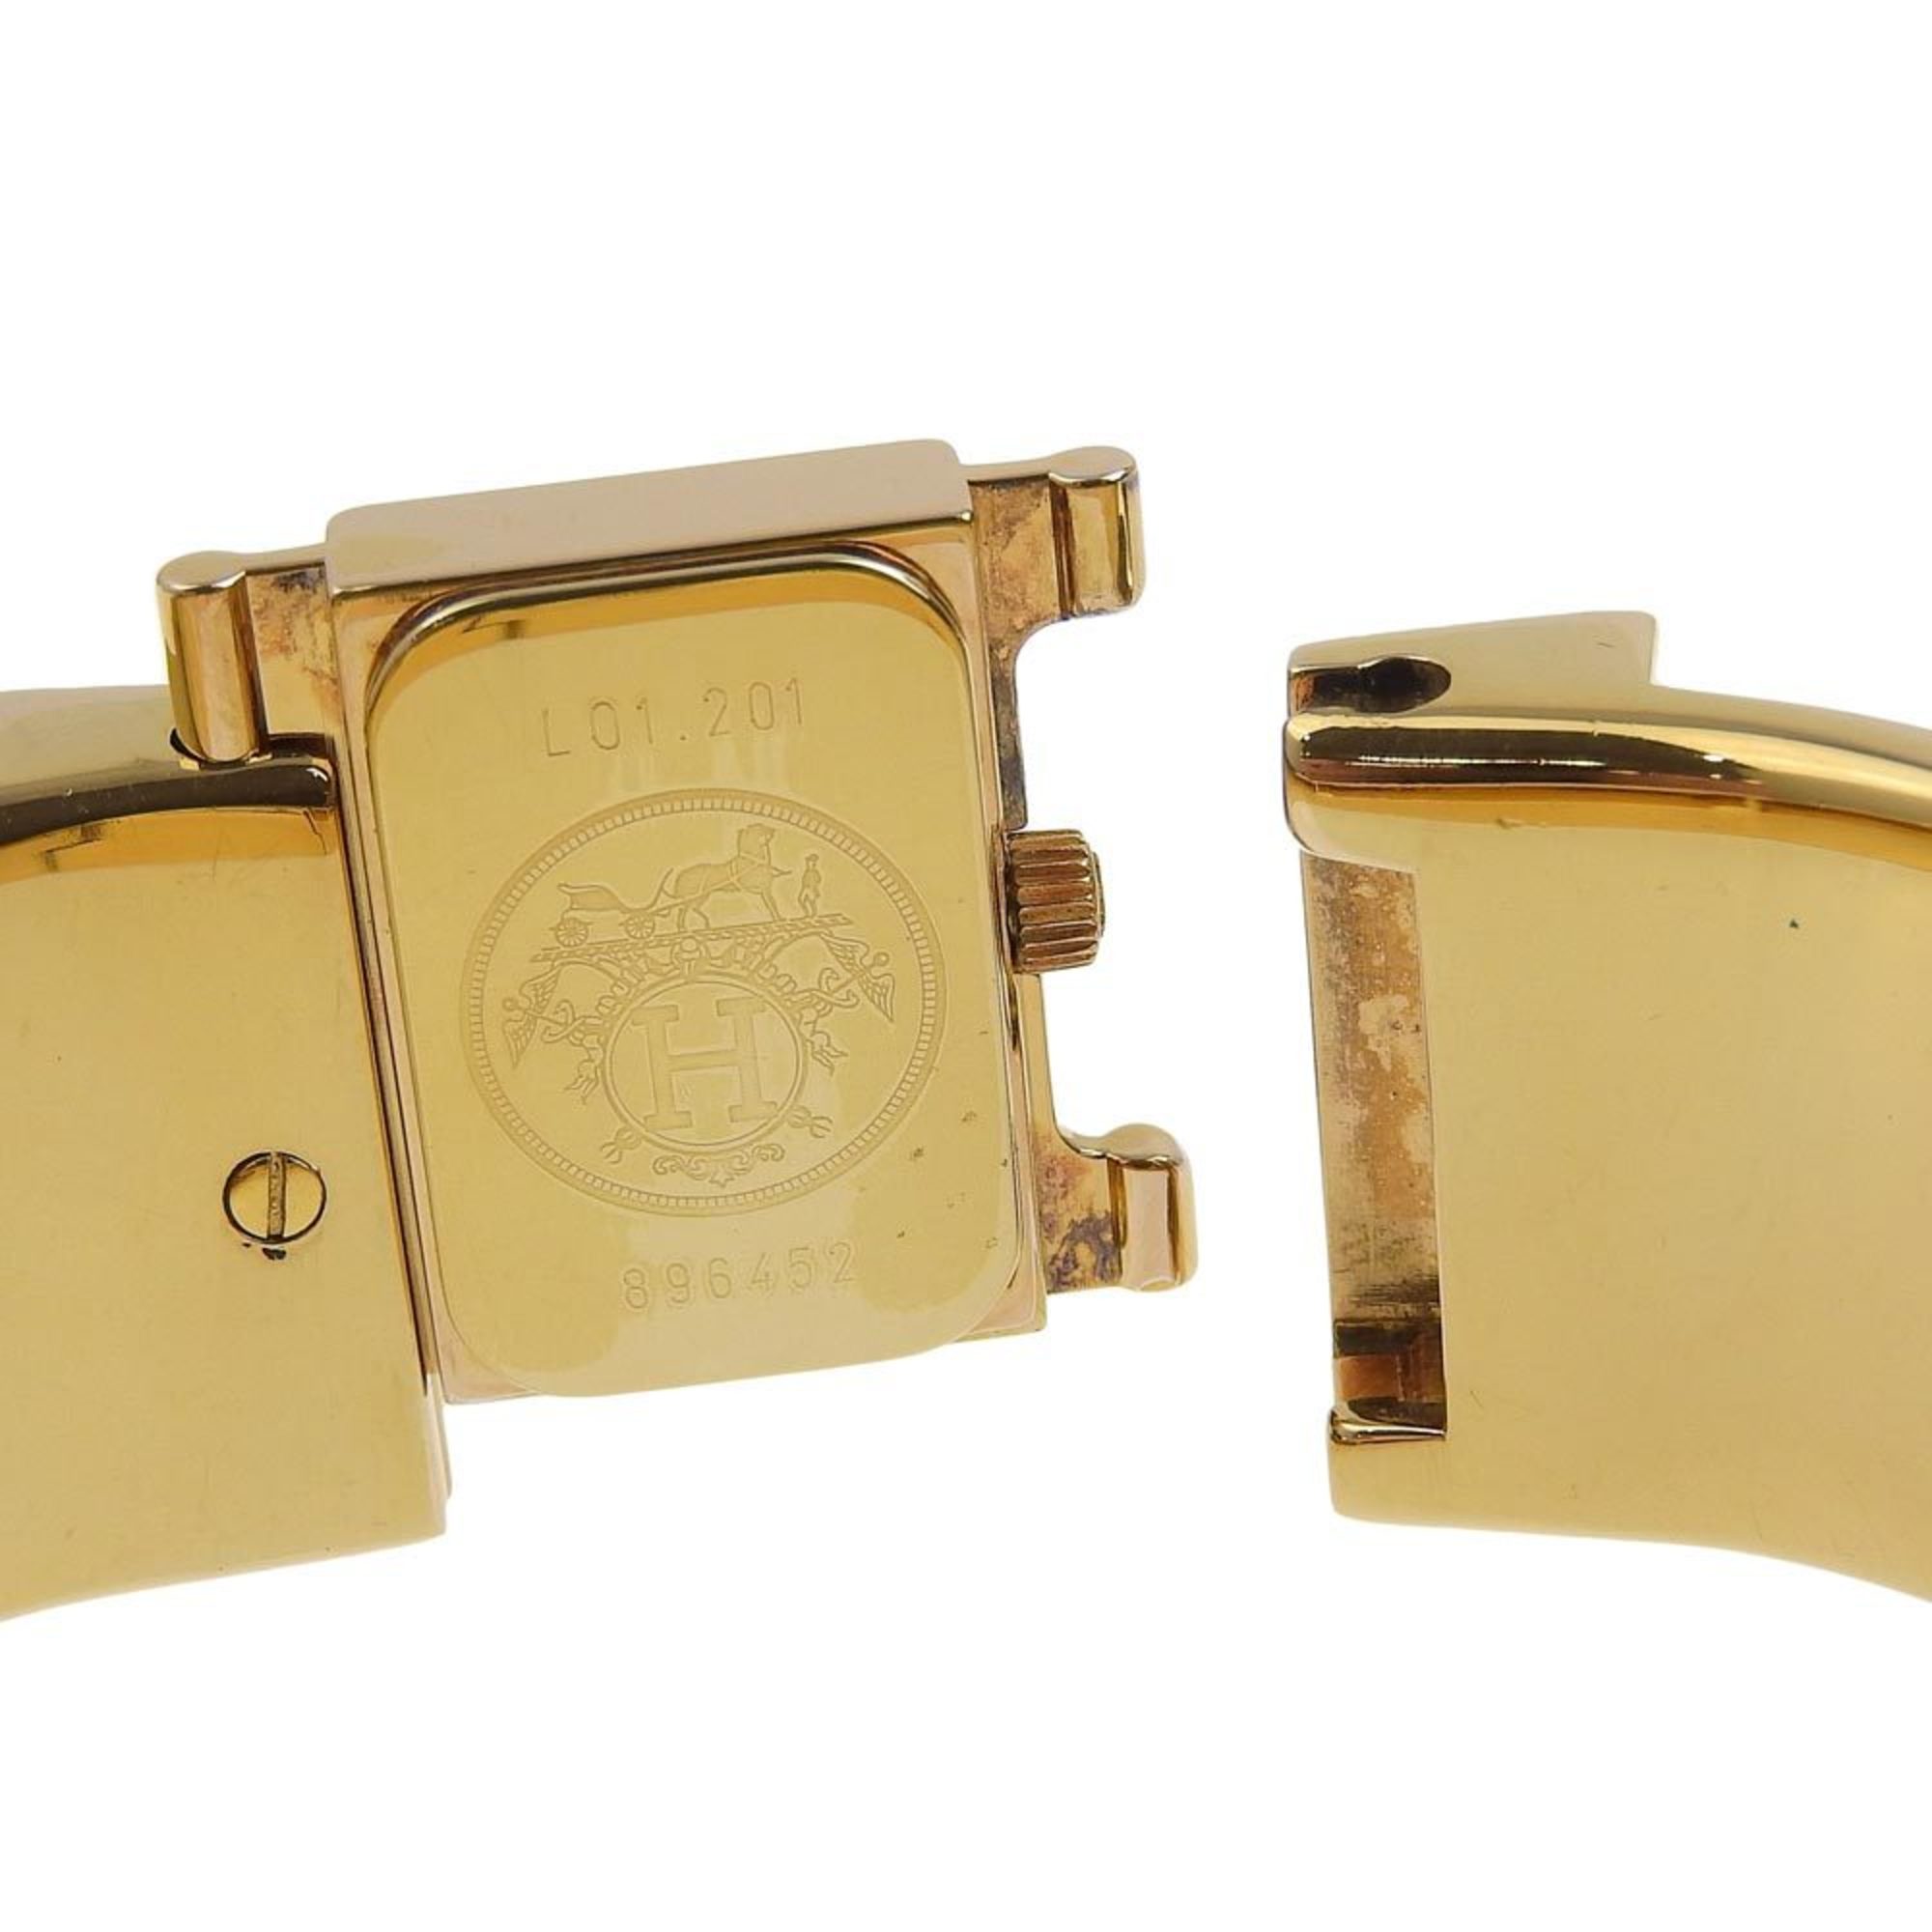 HERMES Hermes location L01.210 gold-plated black quartz analog display ladies gold dial watch